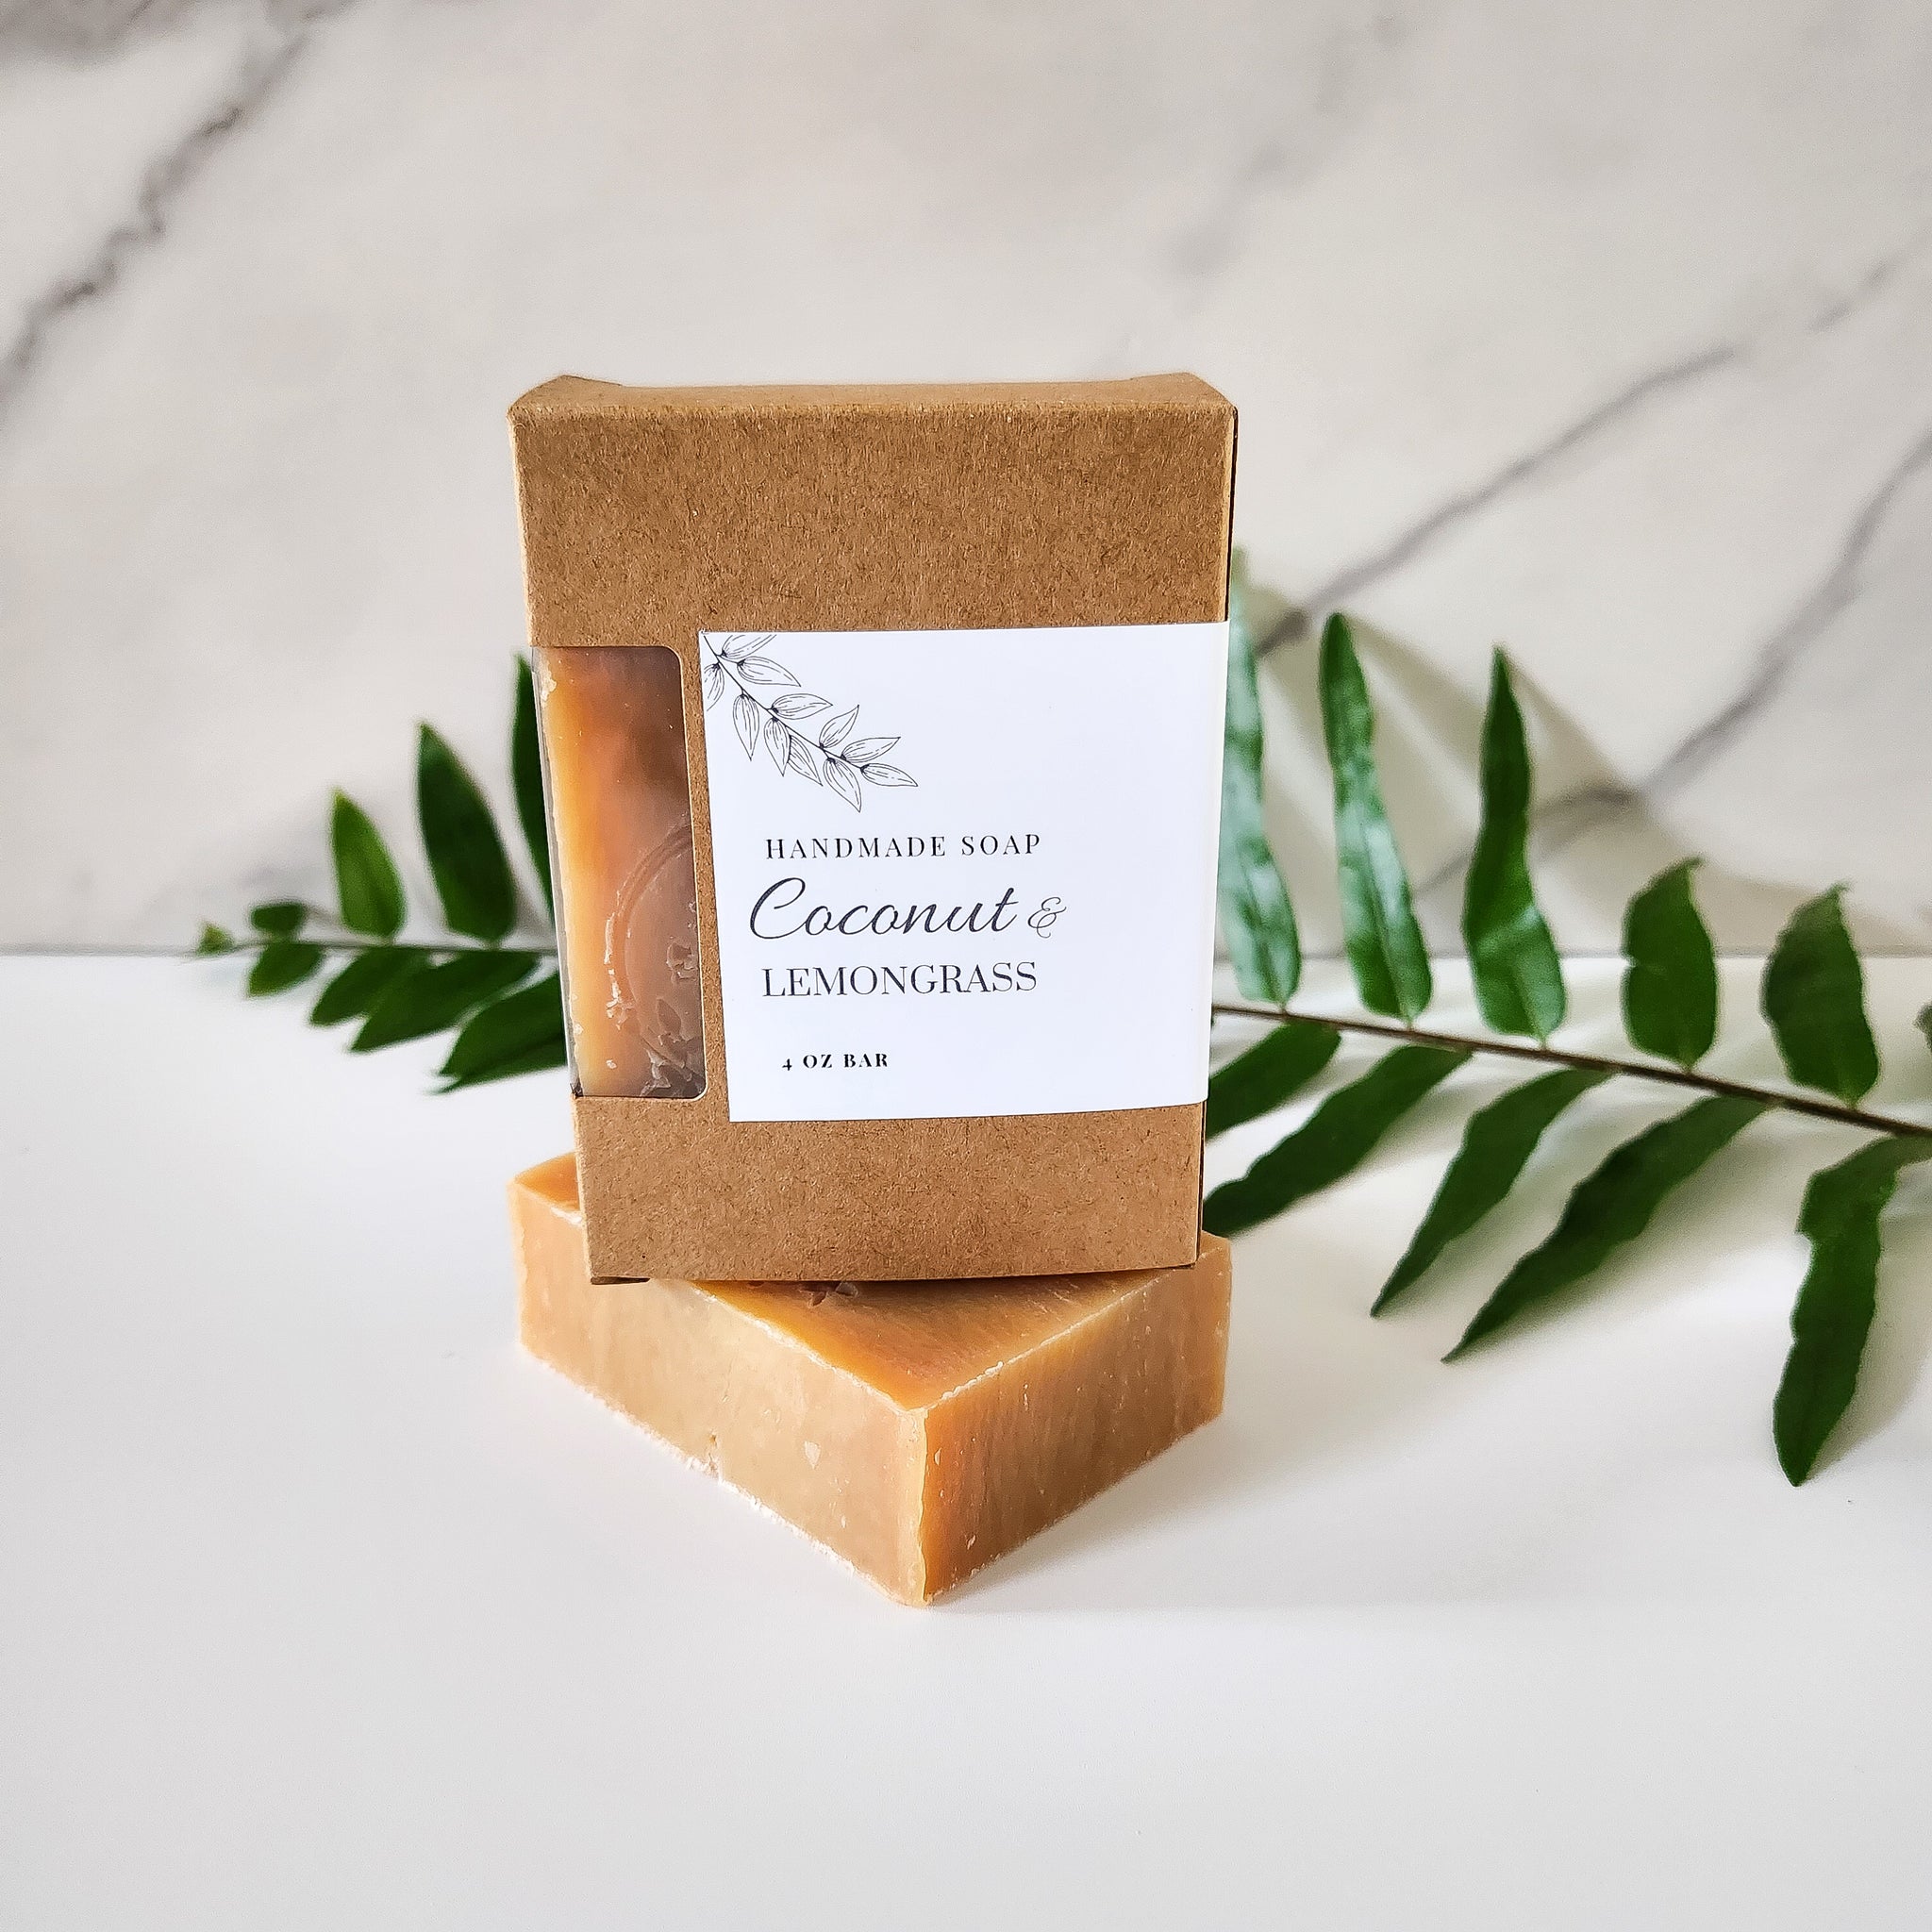 Coconut & Lemongrass Handmade Soap